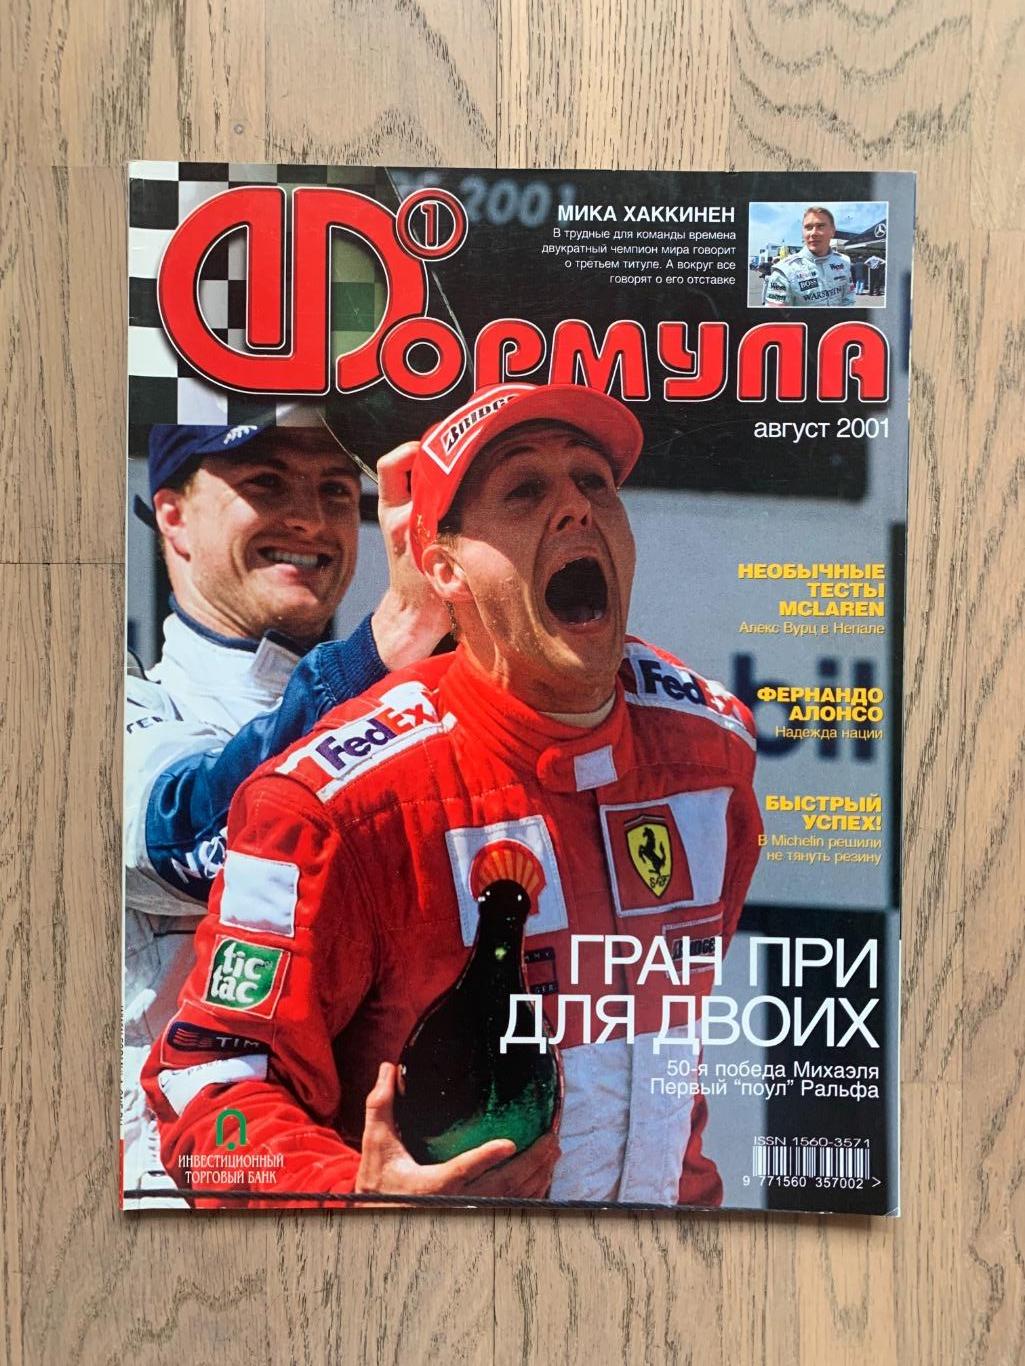 Журнал Формула 1 (Formula Magazine) / август 2001